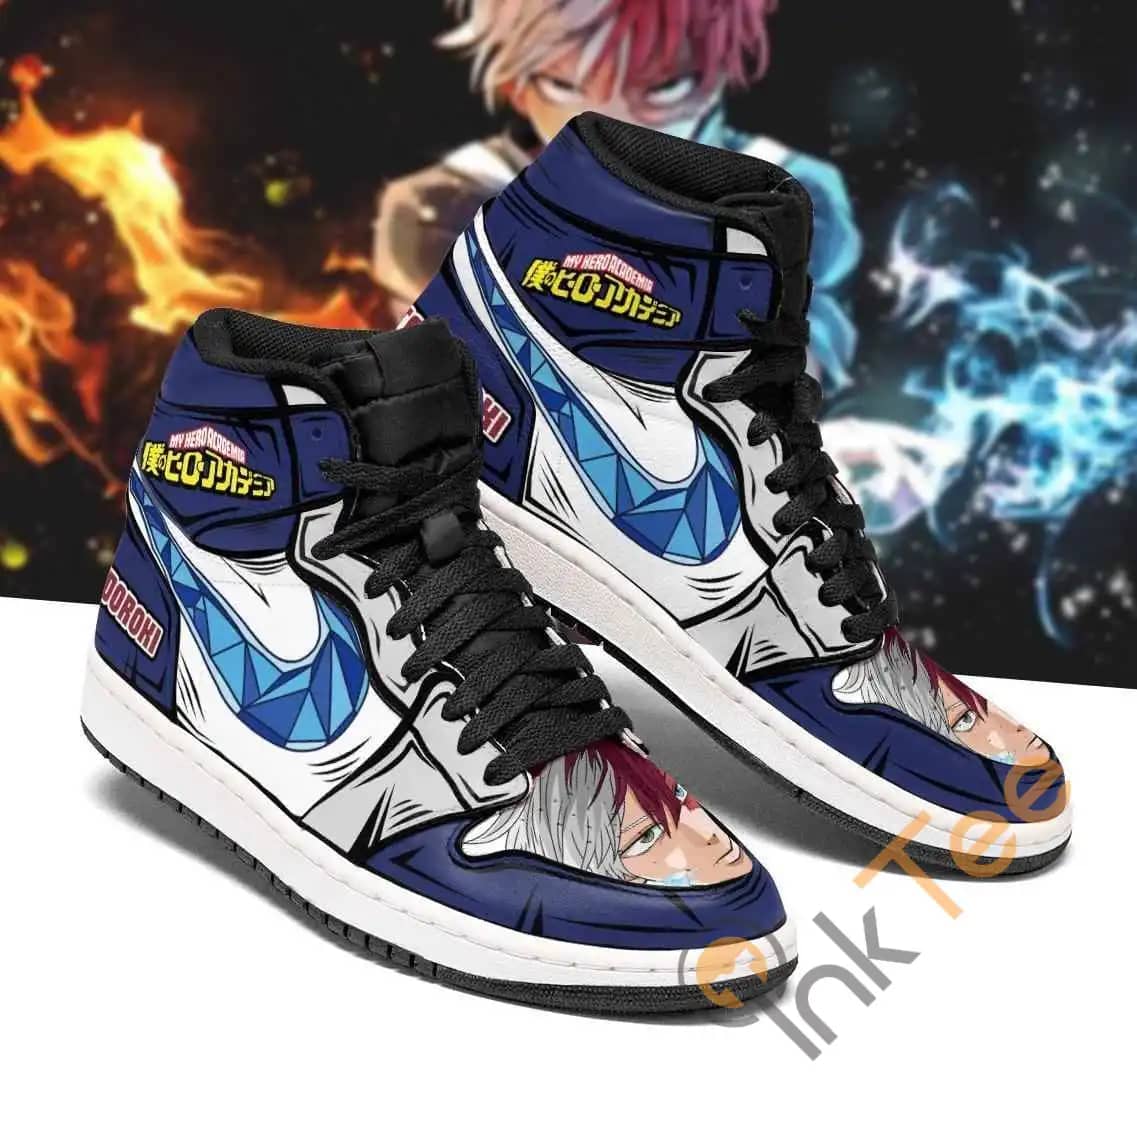 Shoto Todoroki Skill My Hero Academia Sneakers Anime Air Jordan Shoes